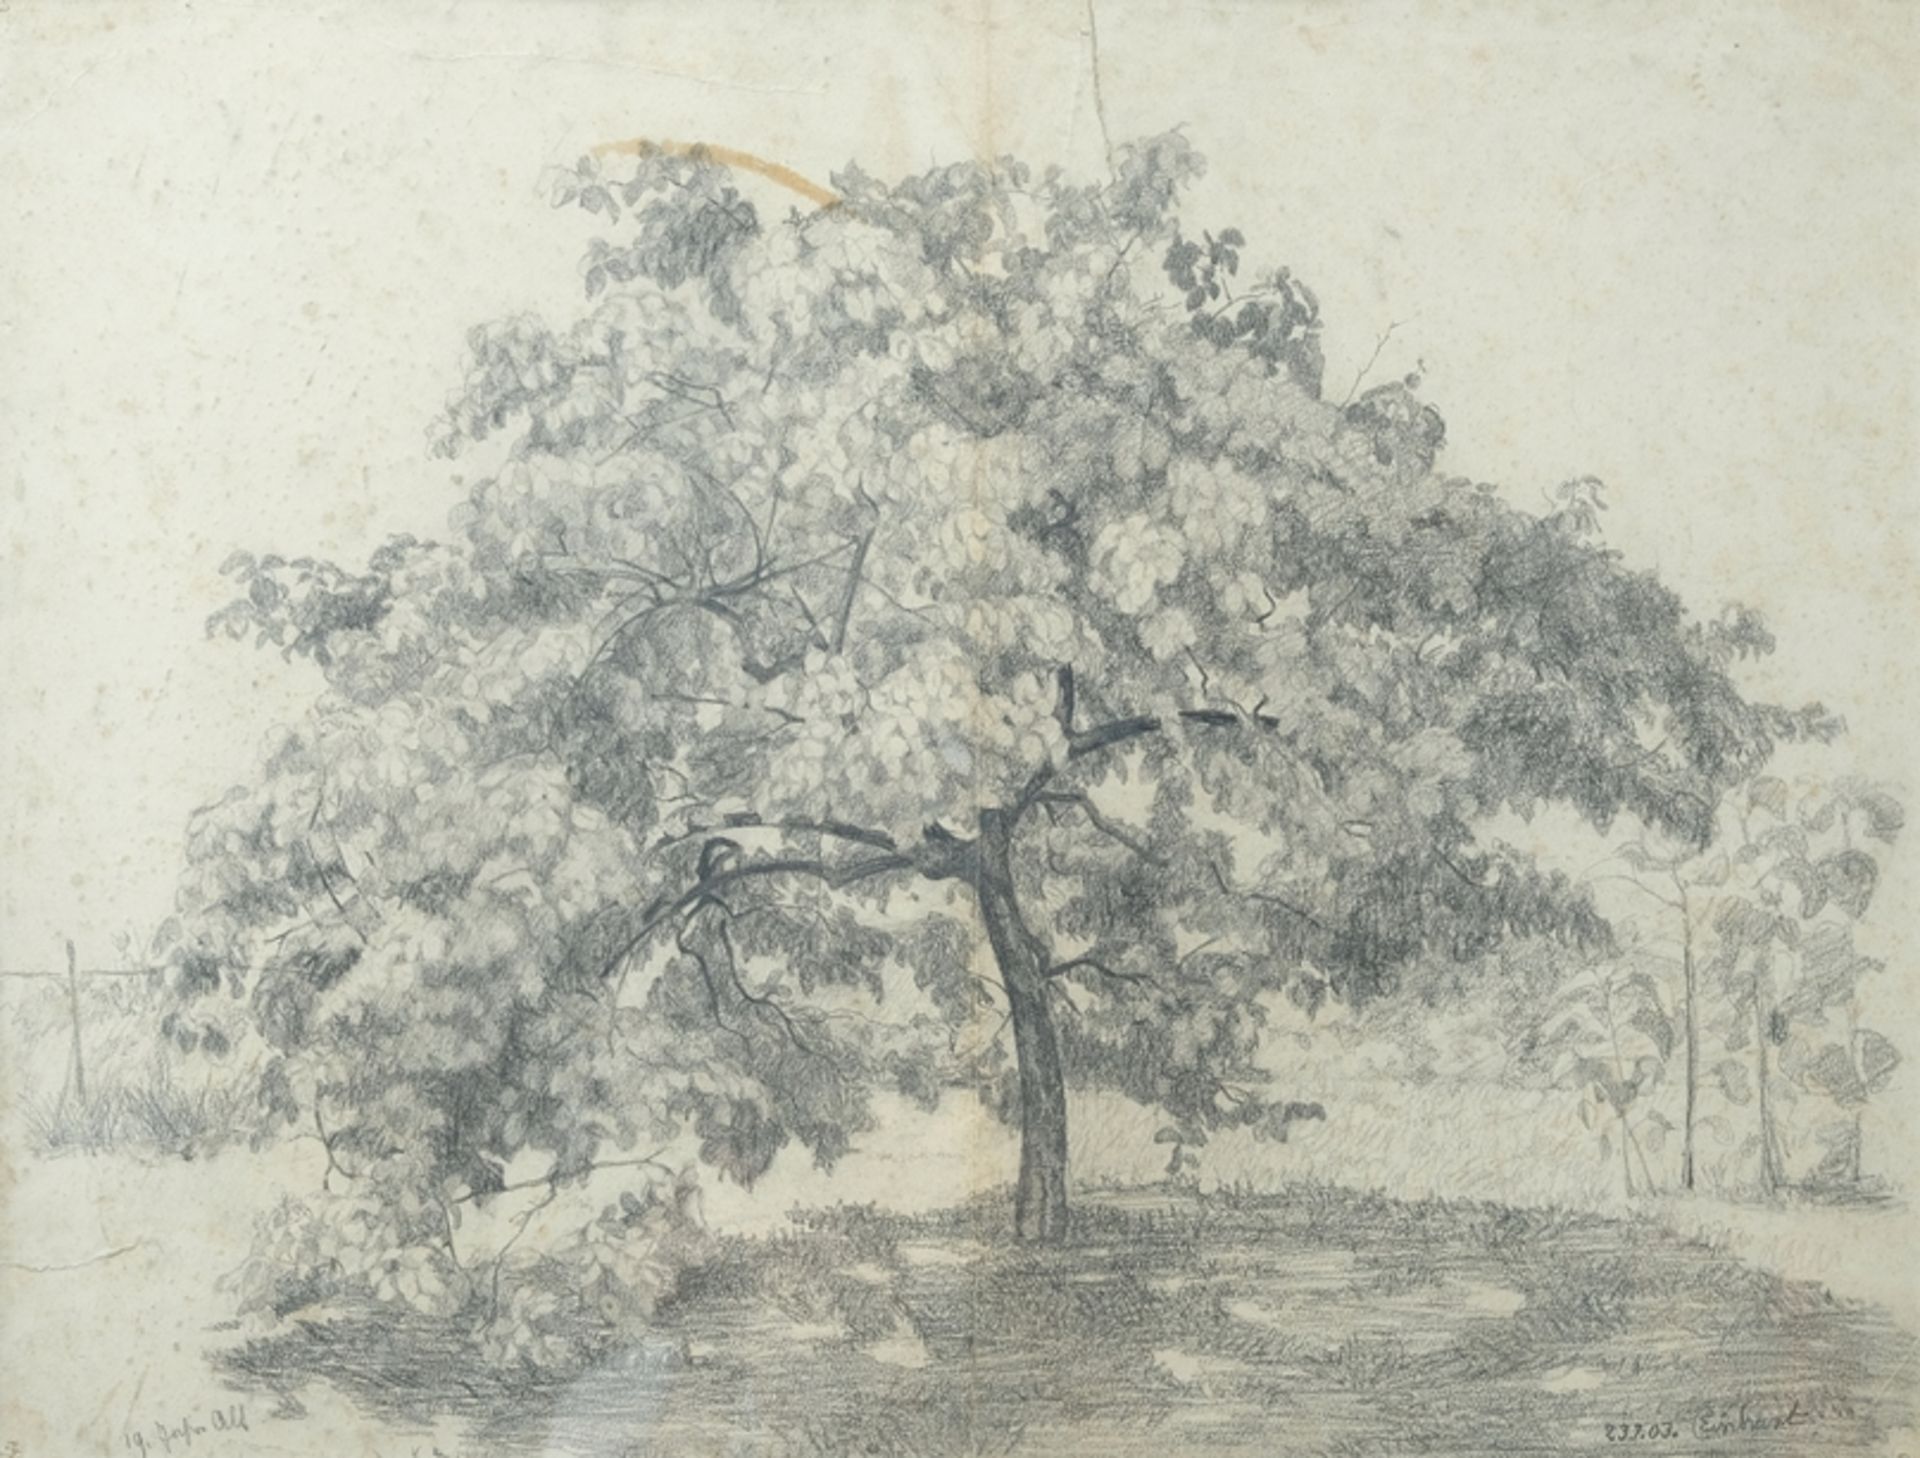 Einhart (20th century) Tree, pencil drawing on paper, 2003.